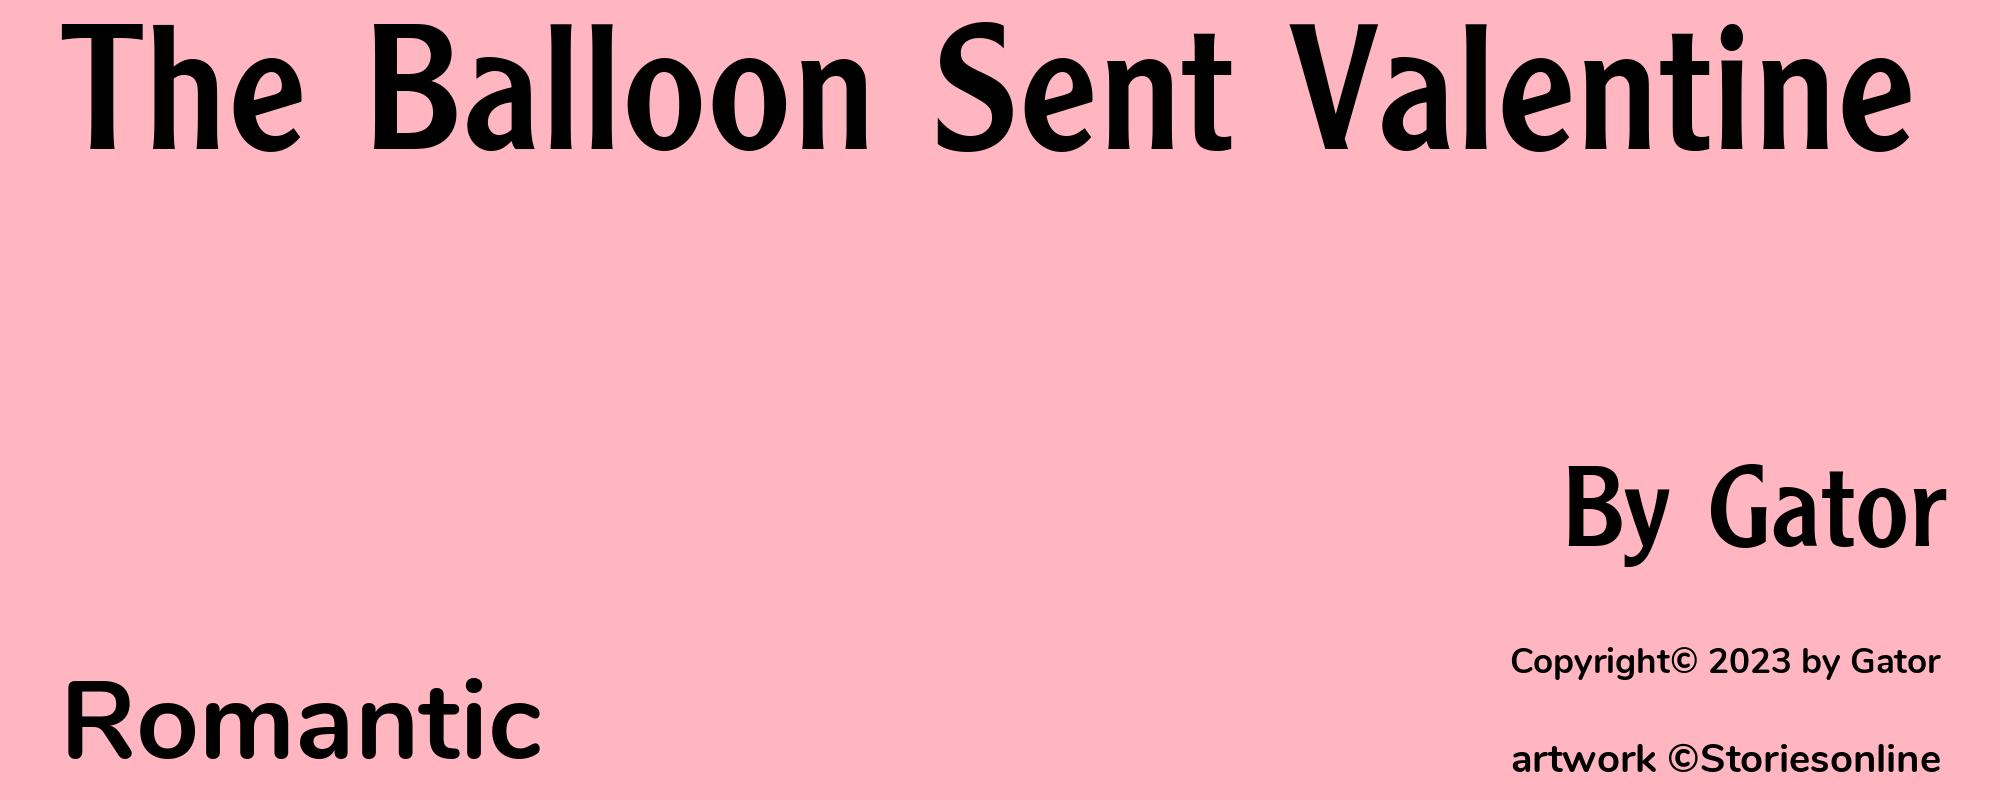 The Balloon Sent Valentine - Cover